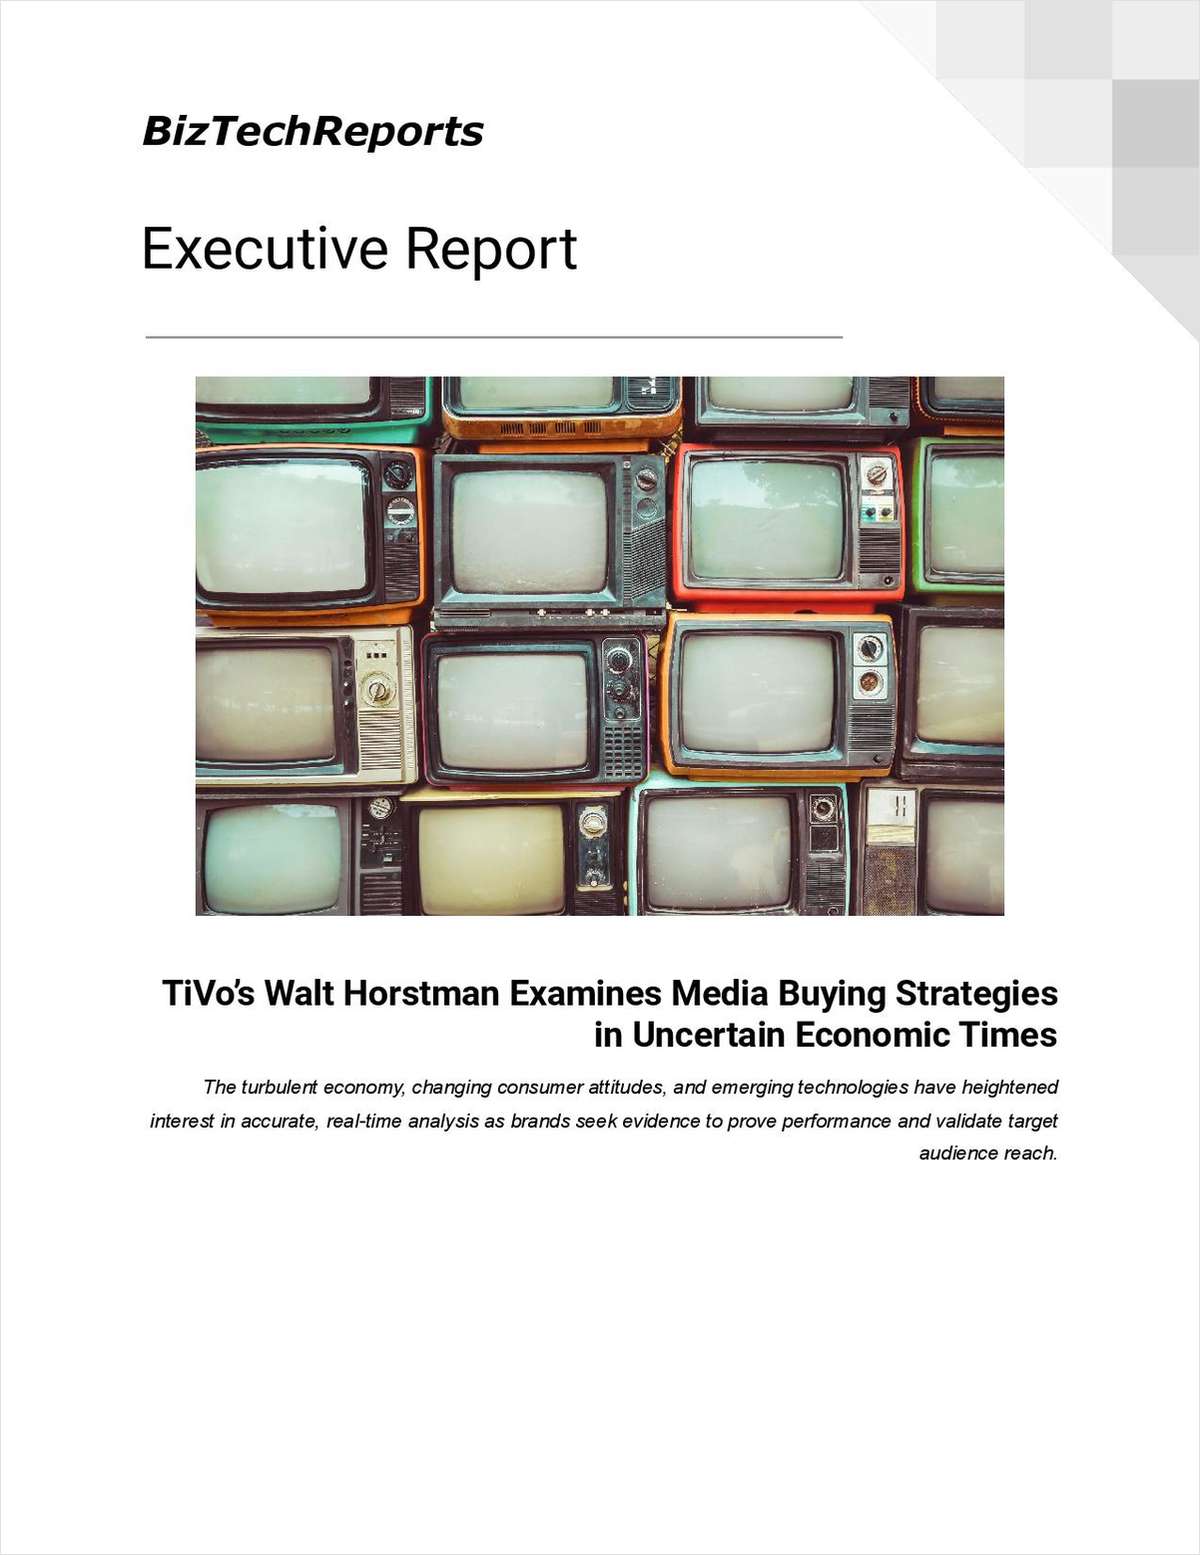 TiVo's Walt Horstman Examines Media Buying Strategies in Uncertain Economic Times